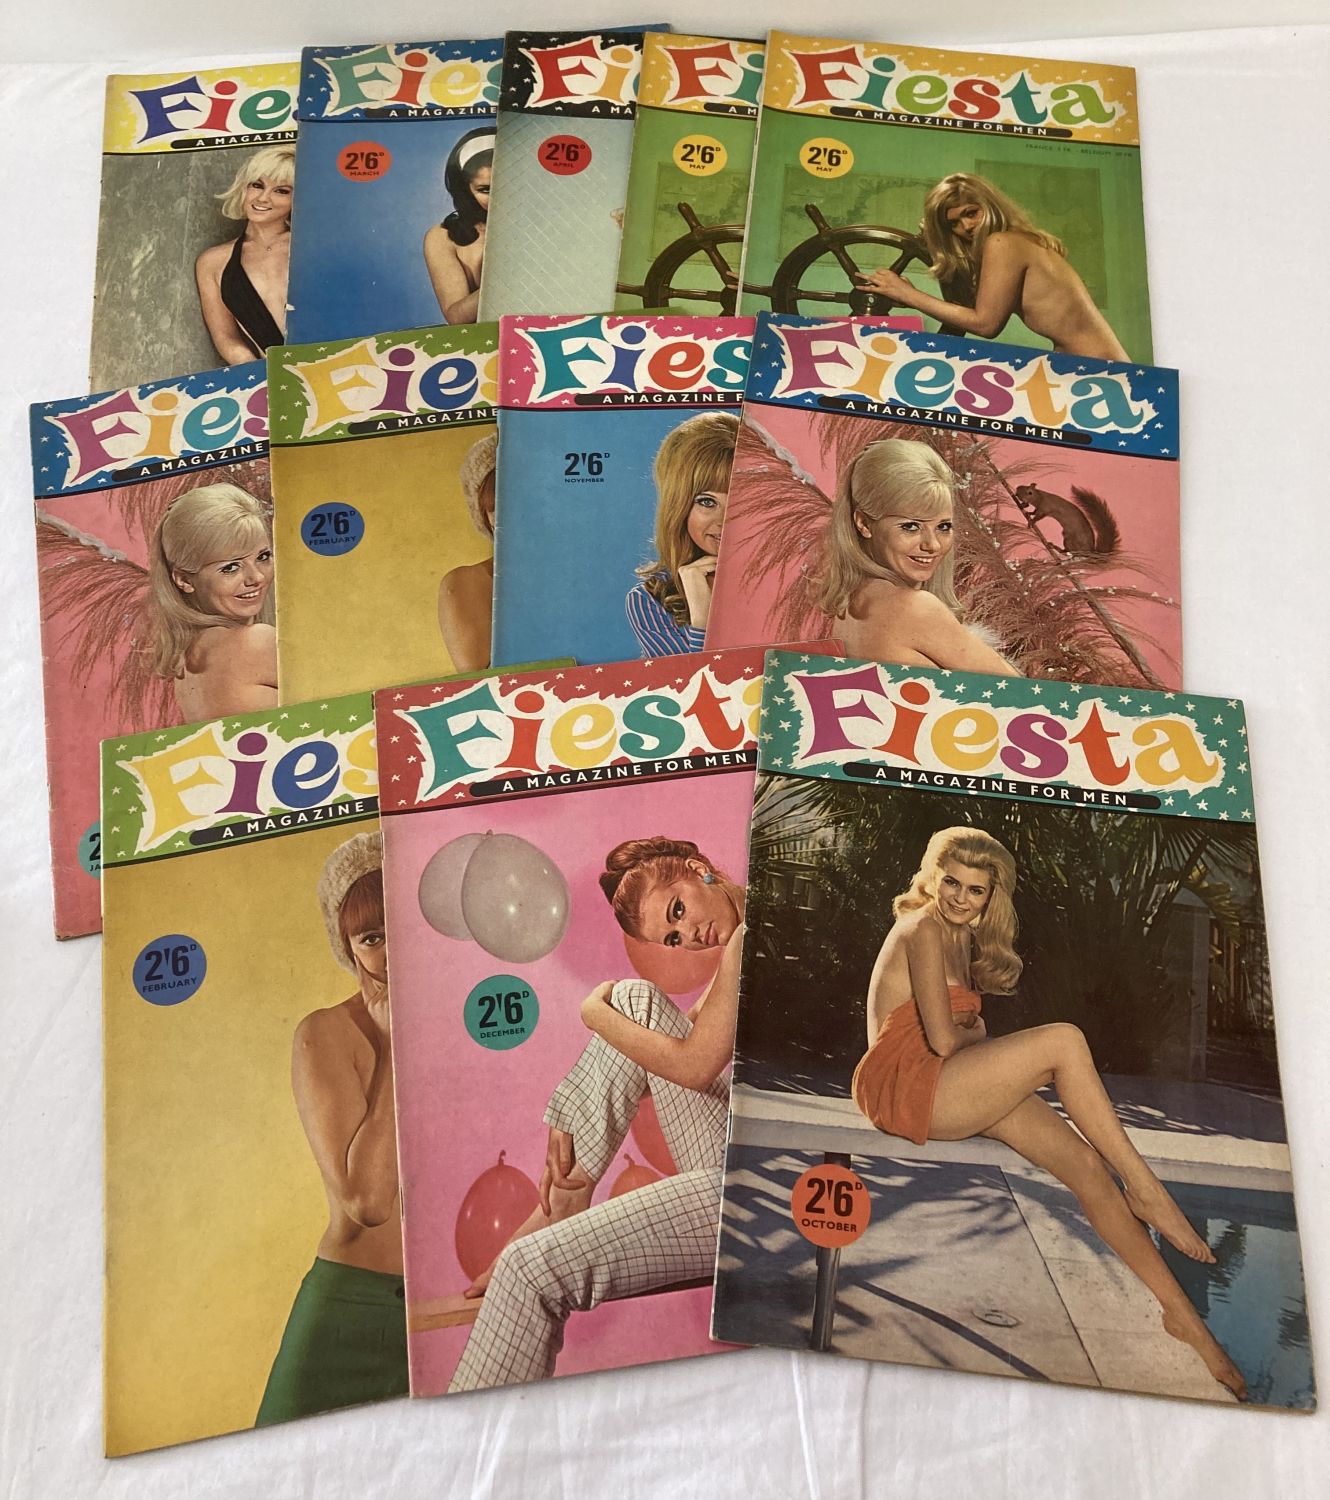 12 vintage 1960's issues of Fiesta, adult erotic magazine.